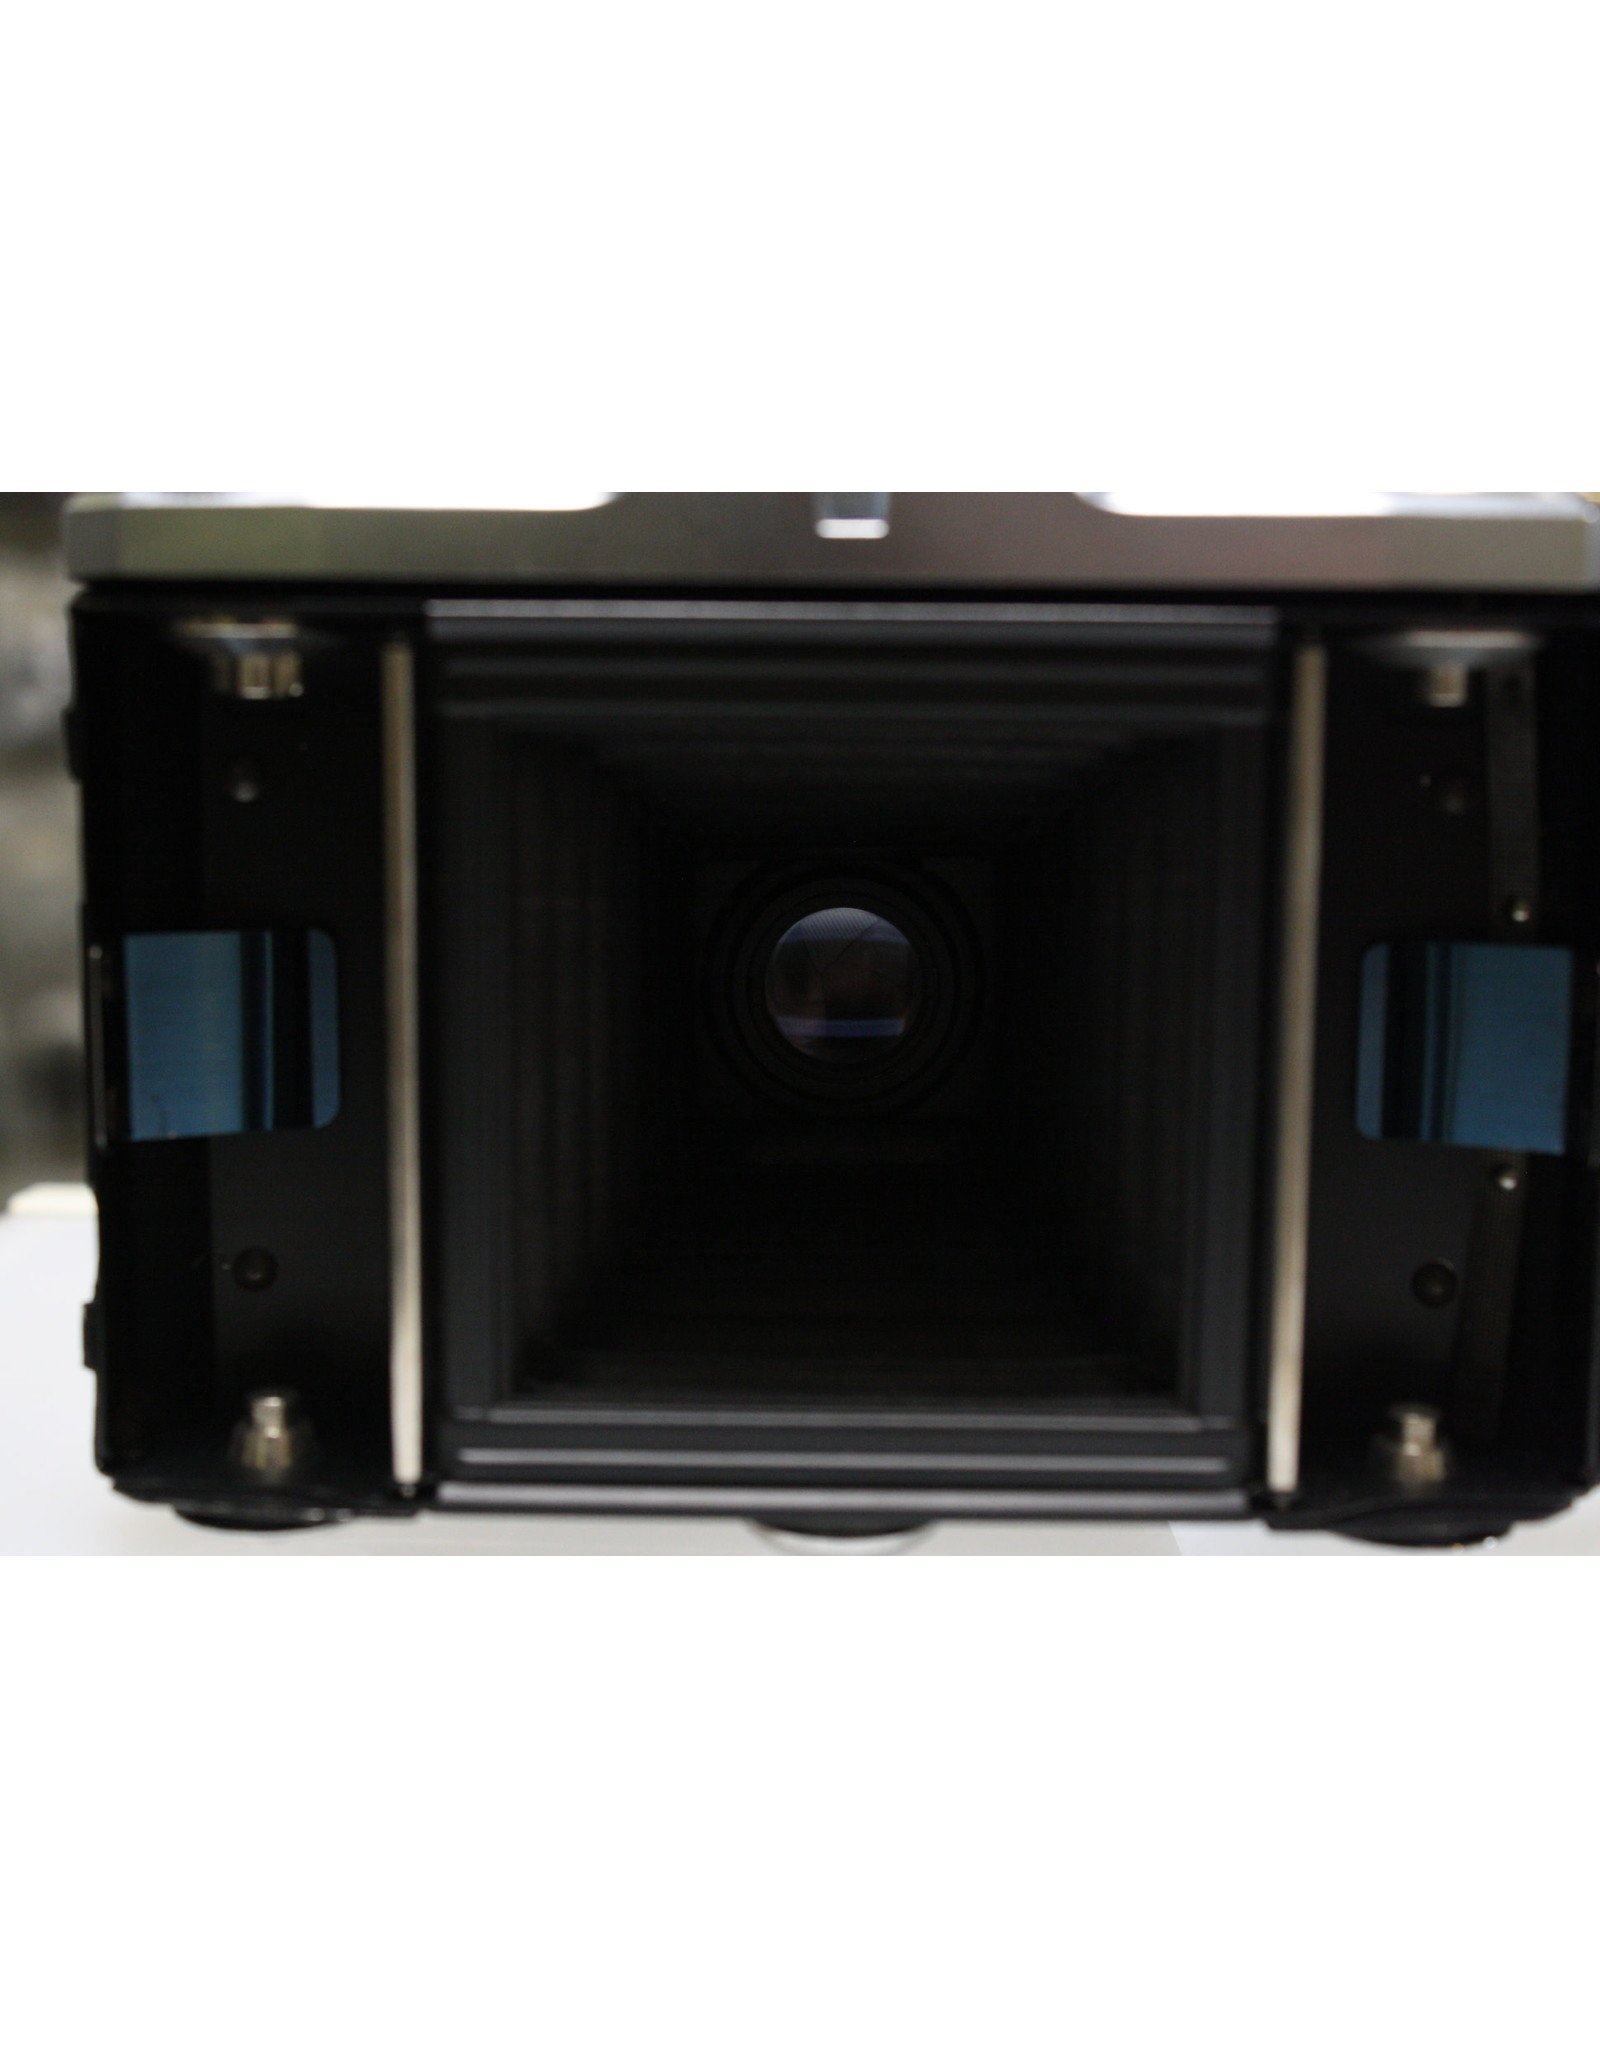 Zeiss Ikon Nettar 518/16 Film Camera w/Novar 75mm f4.5 Lens